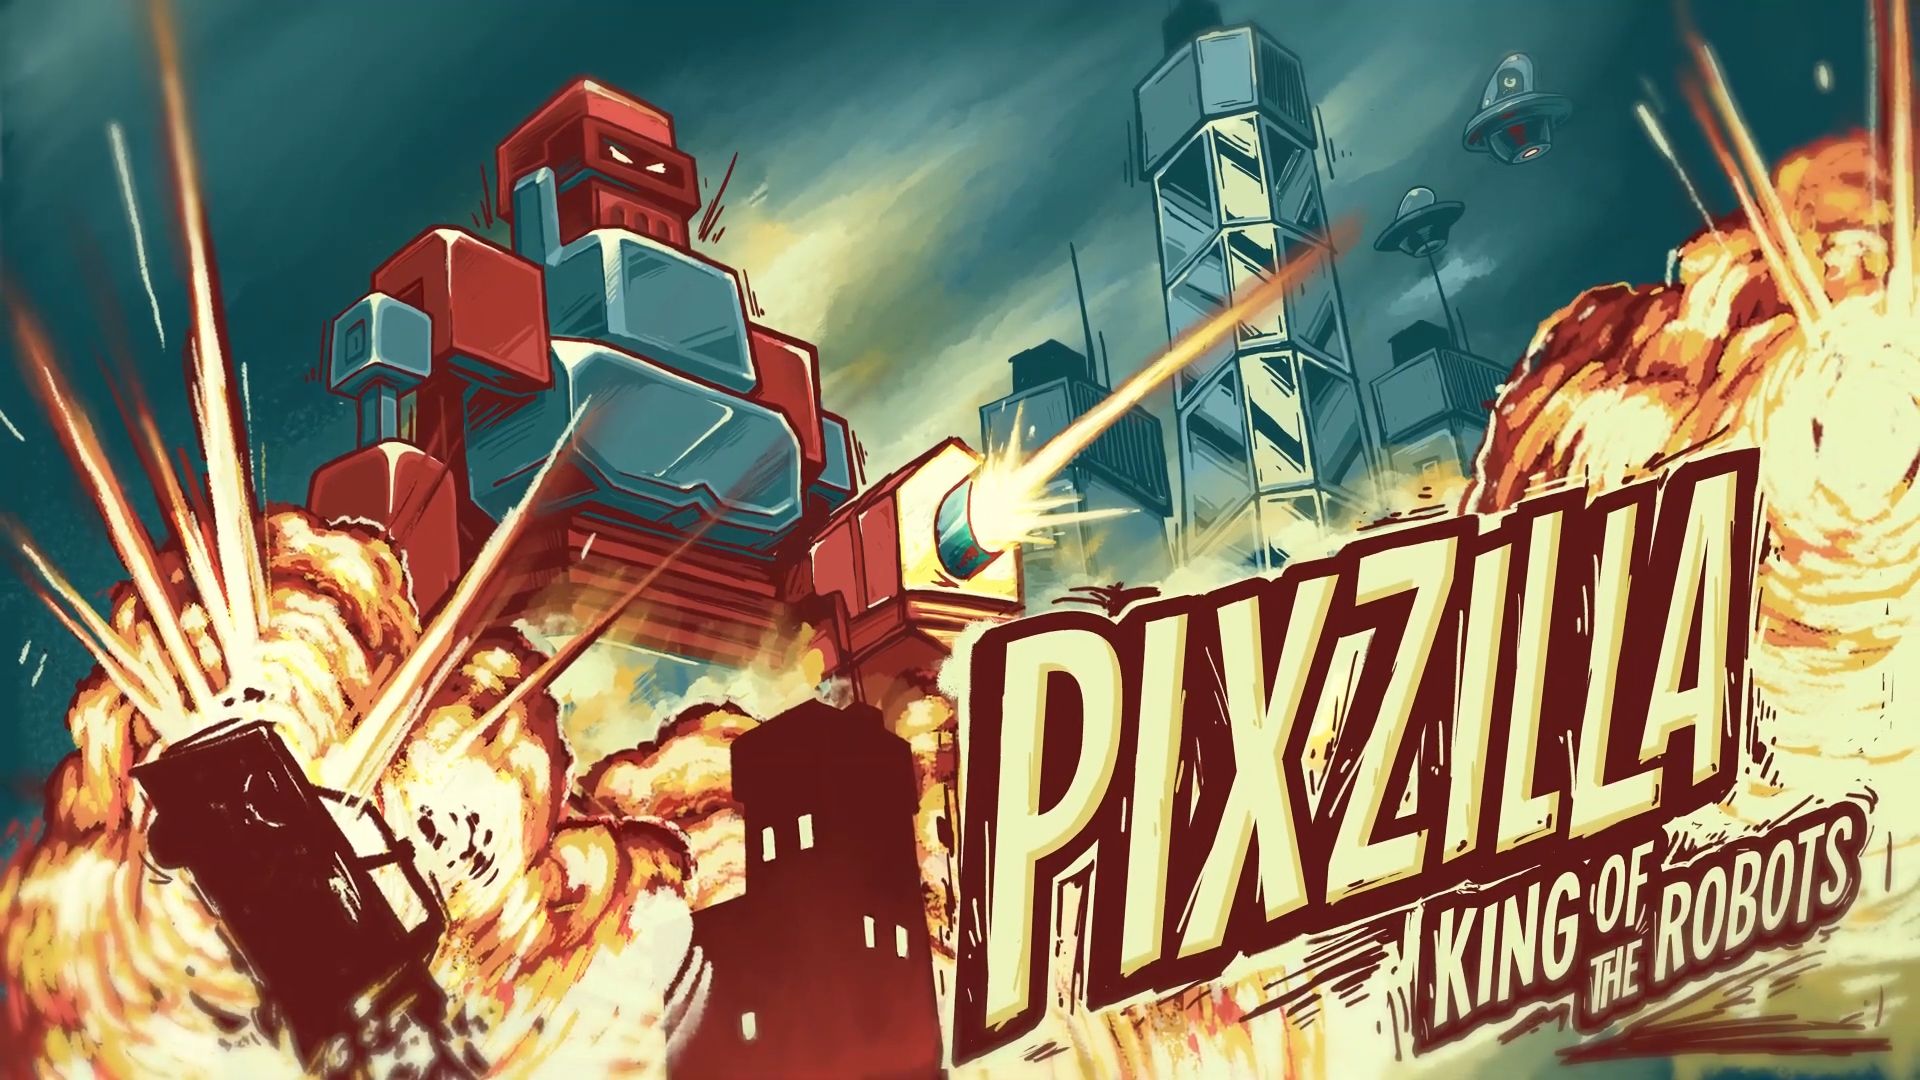 Pixzilla / King of the Robots